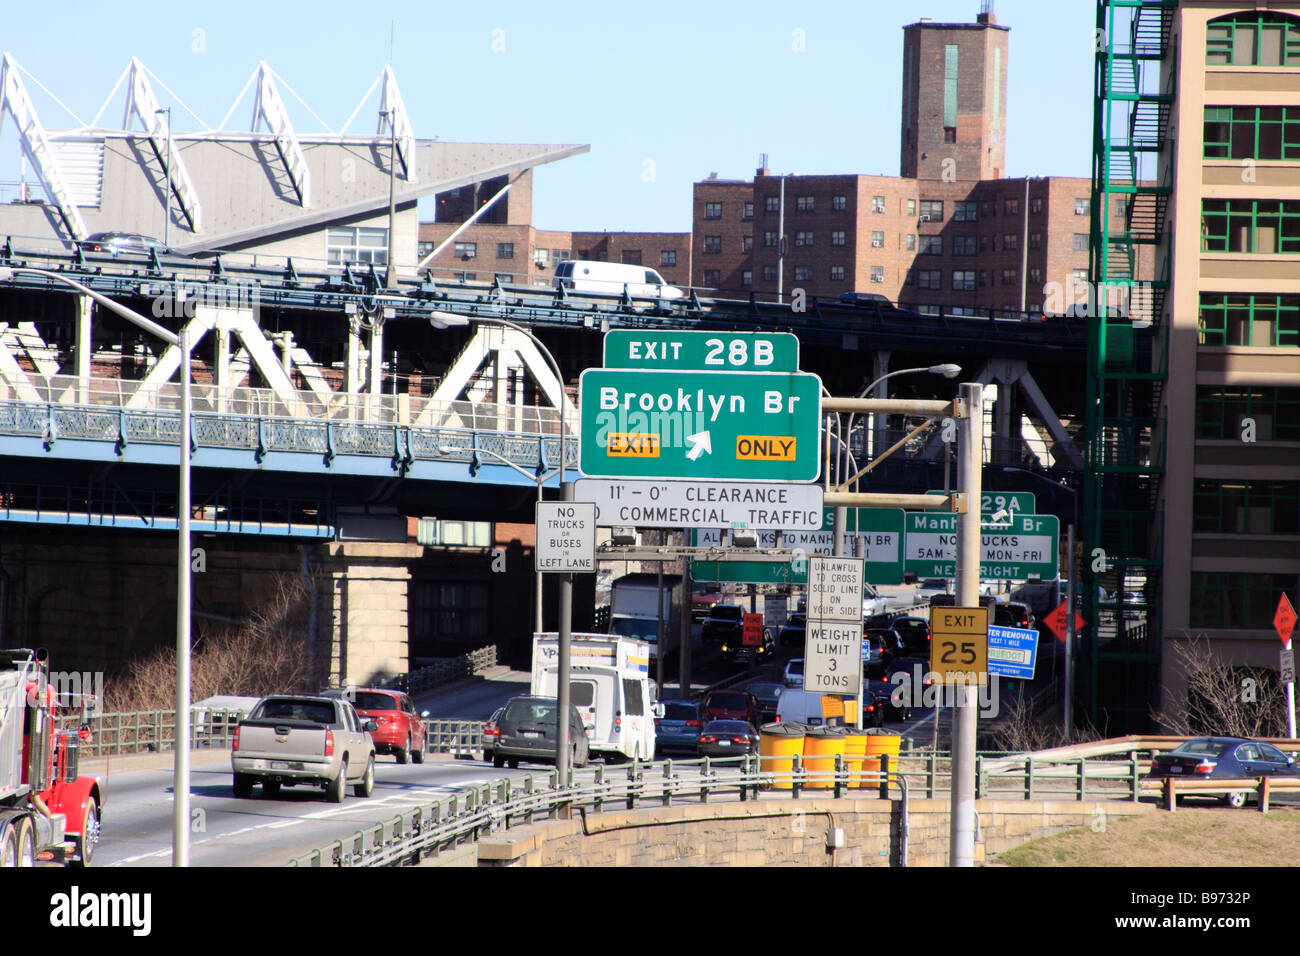 Sortie sur le pont de Brooklyn Brooklyn Queens Expressway en direction nord, New York City, USA Banque D'Images